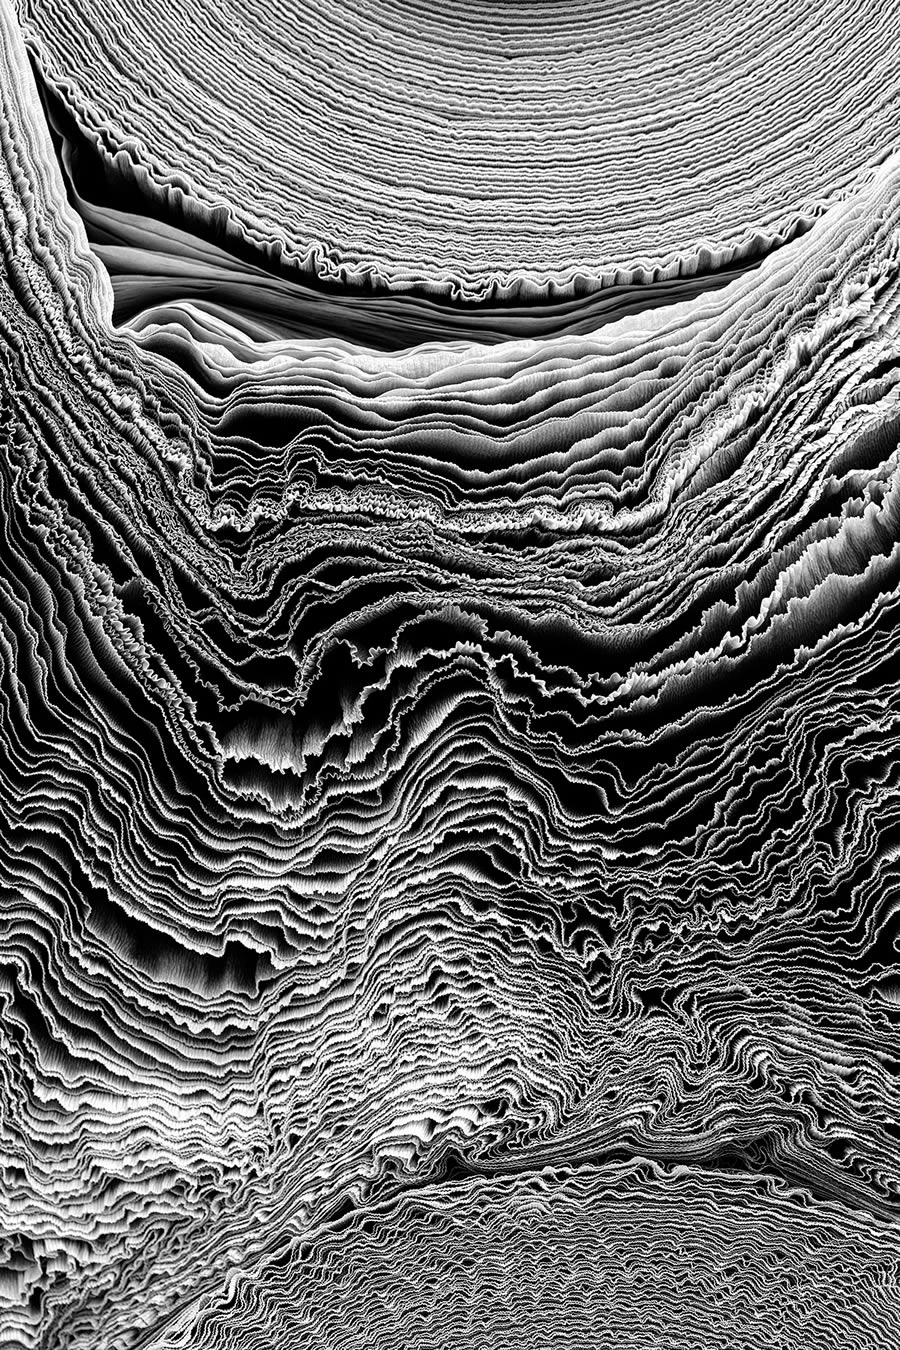 Weathered Paper Rolls In Black And White By Tatu Salokoski